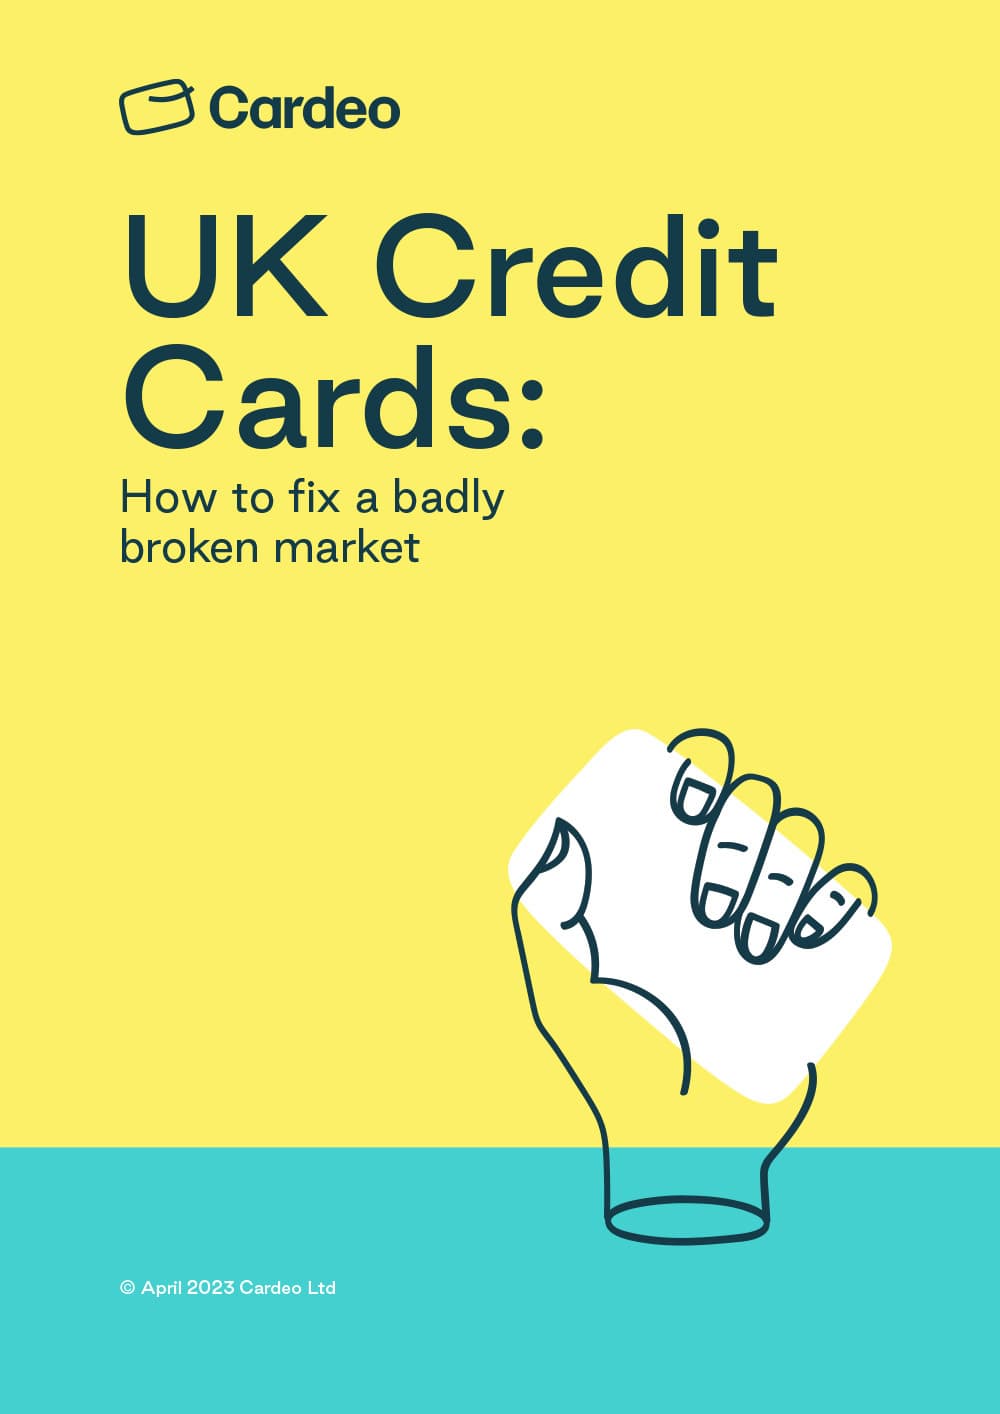 Cardeo UK Credit Cards White Paper v8 1